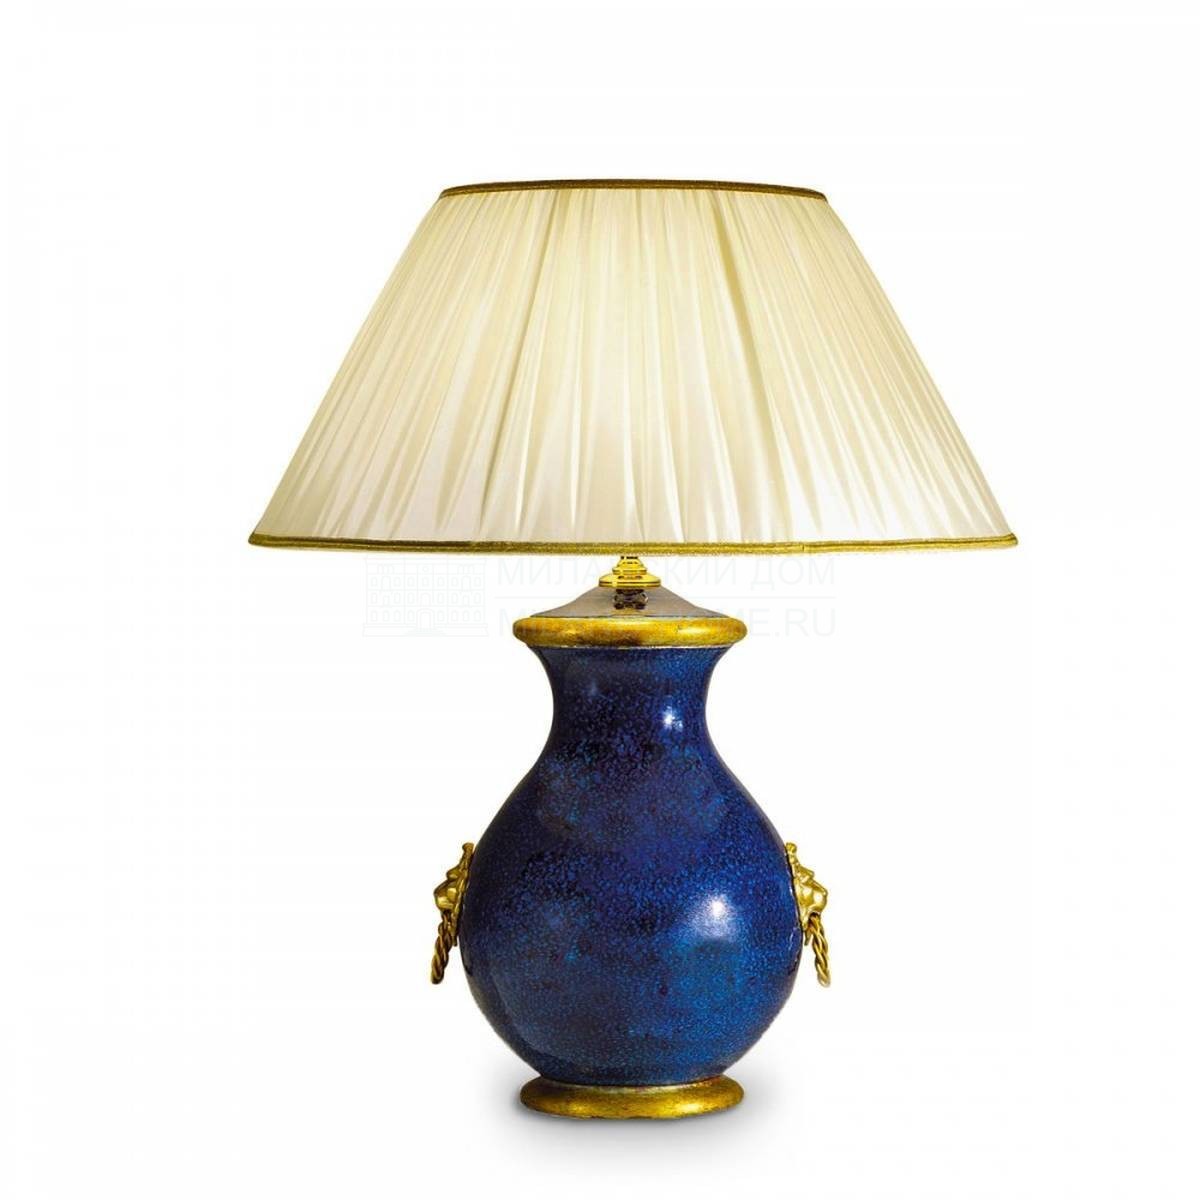 Настольная лампа Coloniale table lamp из Италии фабрики MARIONI